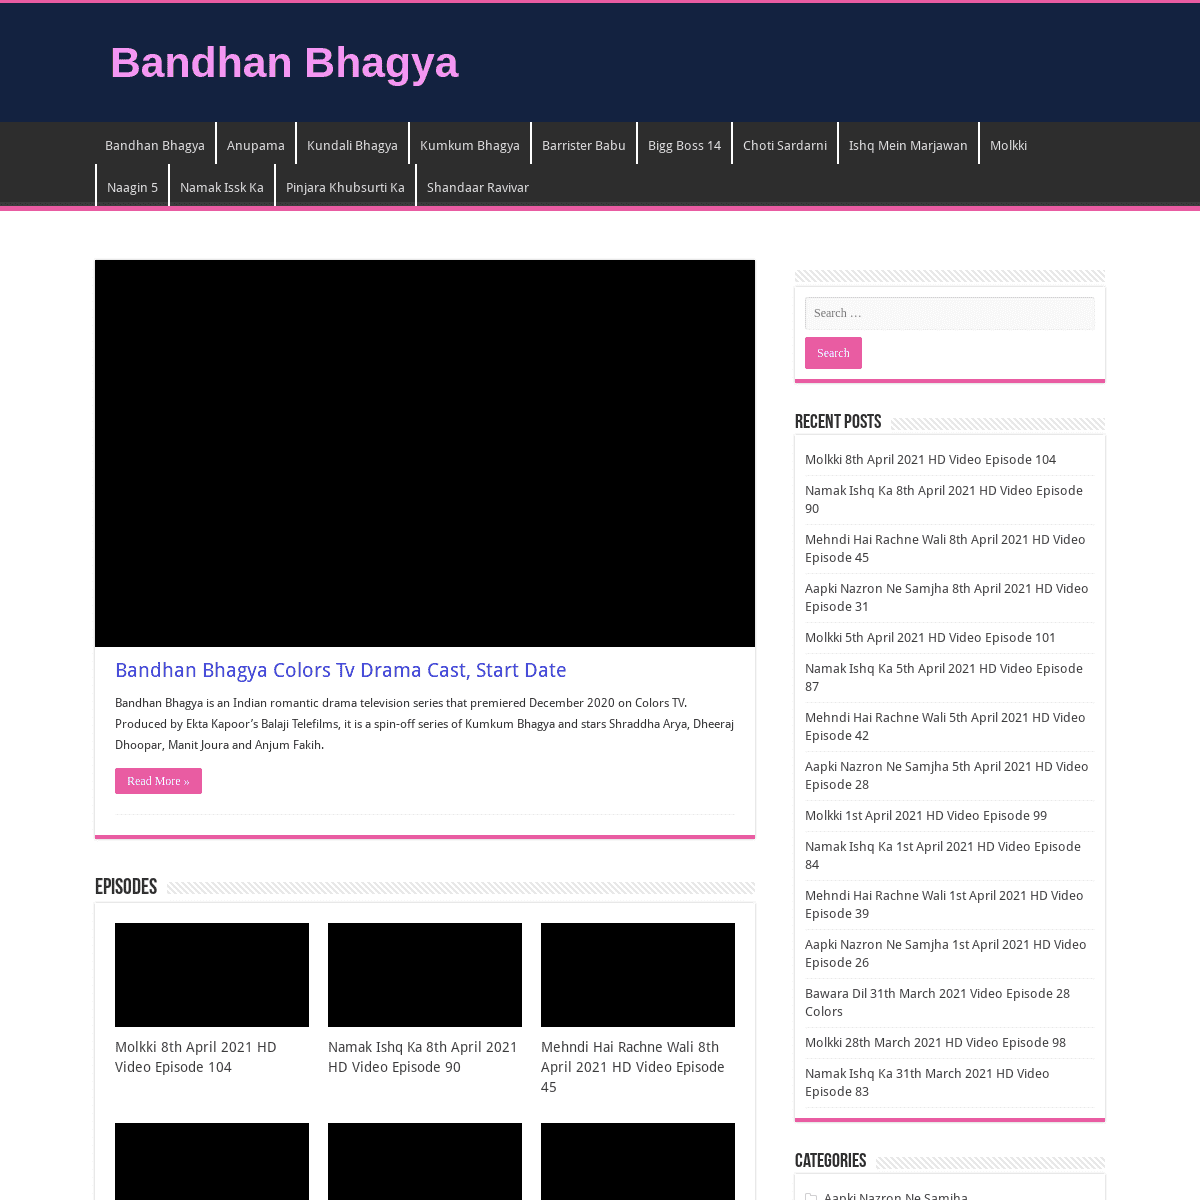 A complete backup of https://bandhanbhagya.com